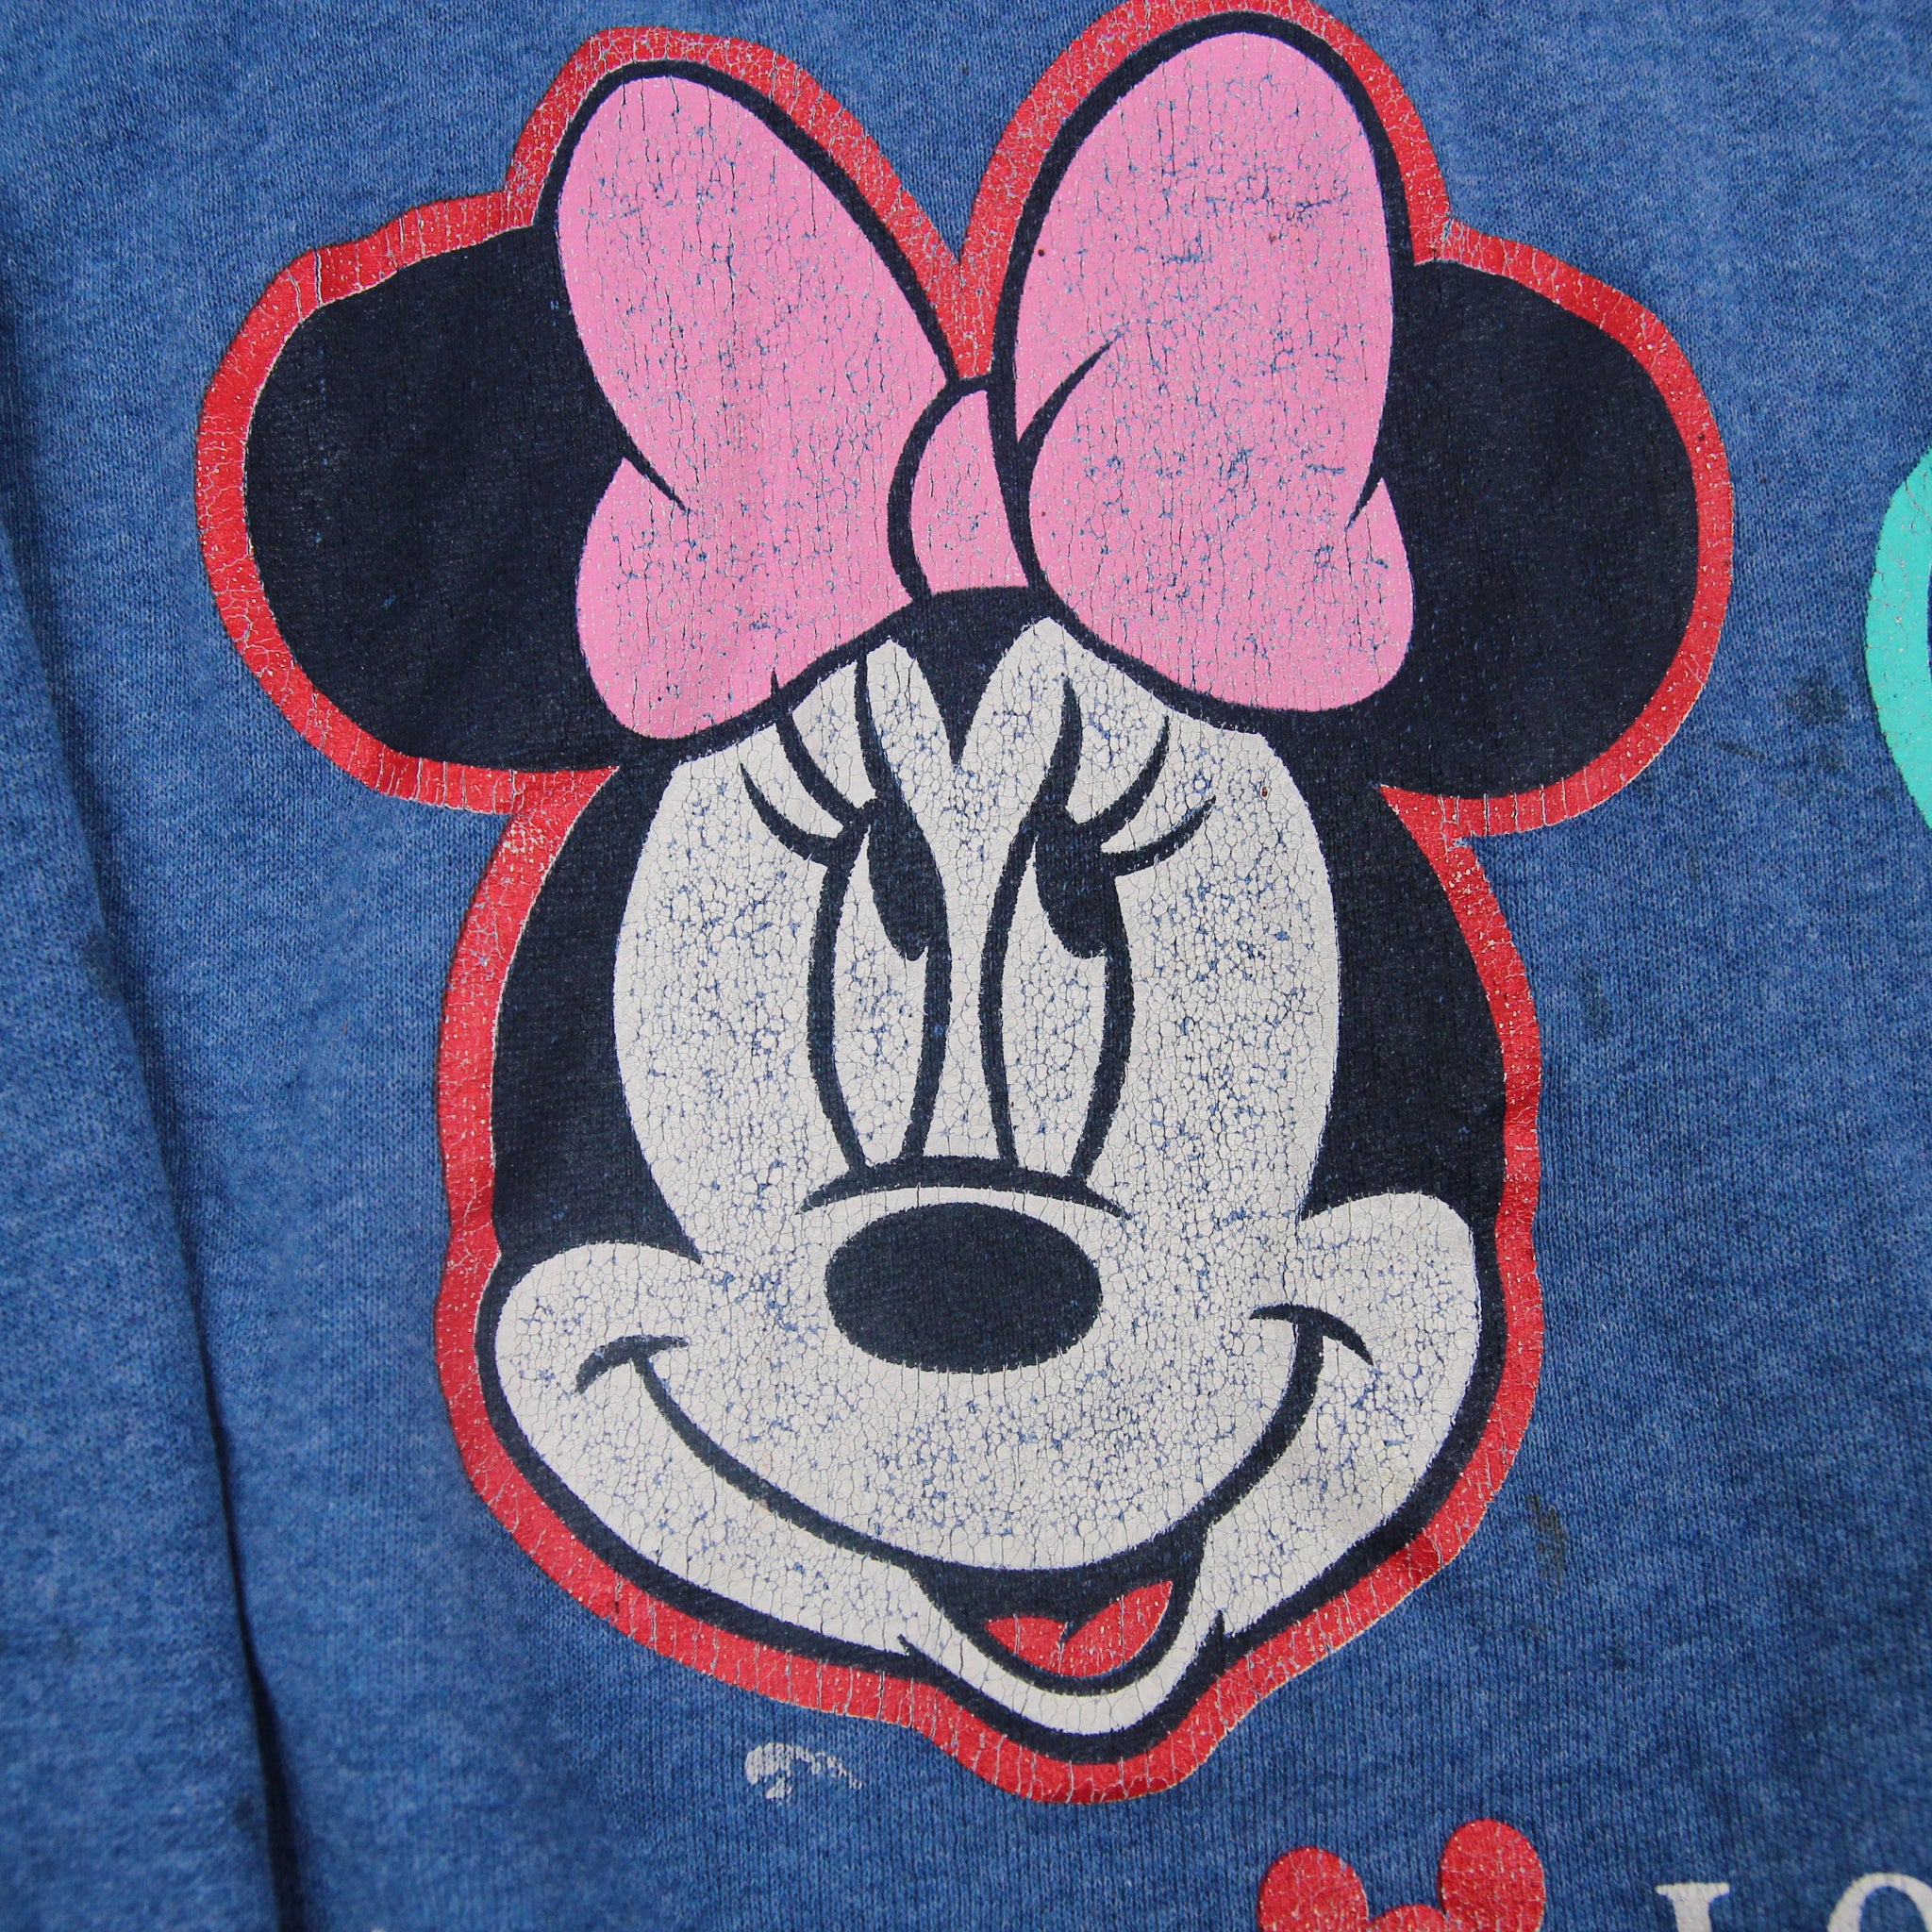 Disney Mickey Mouse Graphic Crewneck Sweatshirt